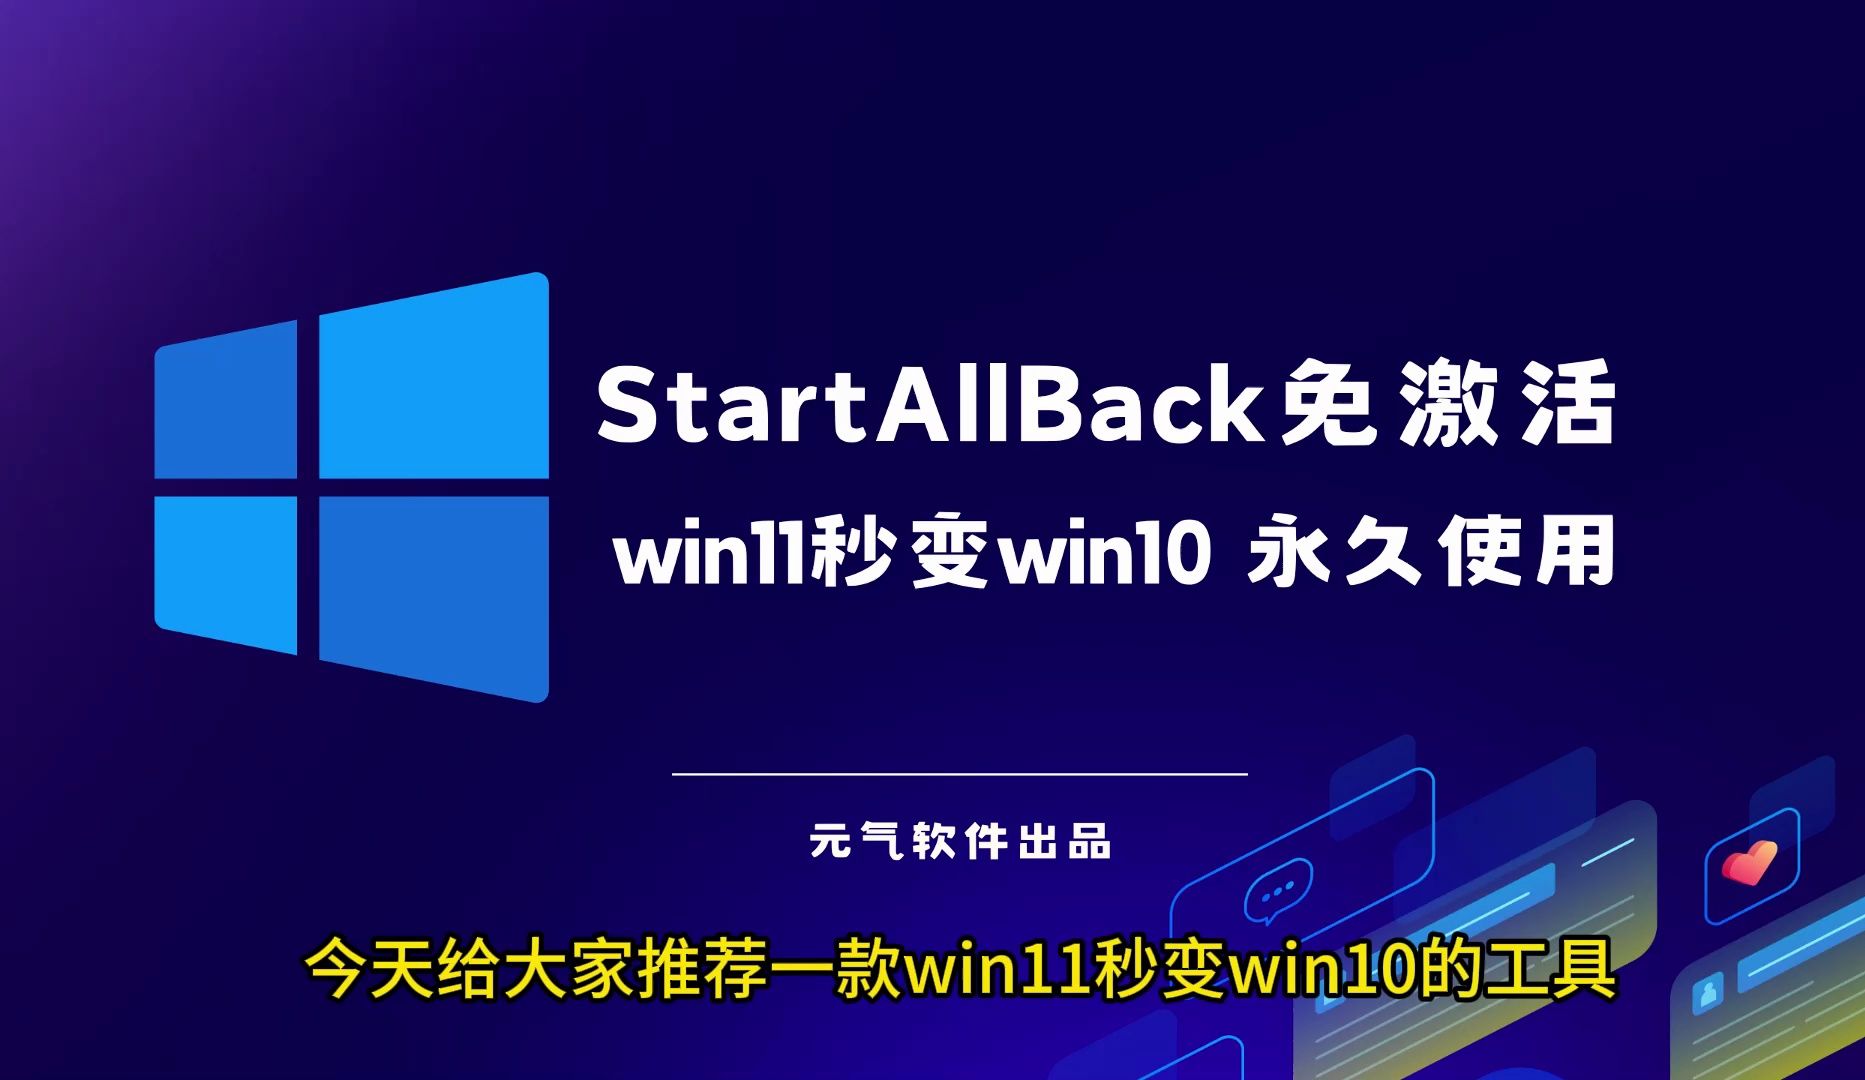 StartAllBack免激活版本，永久使用，win11秒变win10，StartAllBack 可以恢复Windows 10风格的经典开始菜单